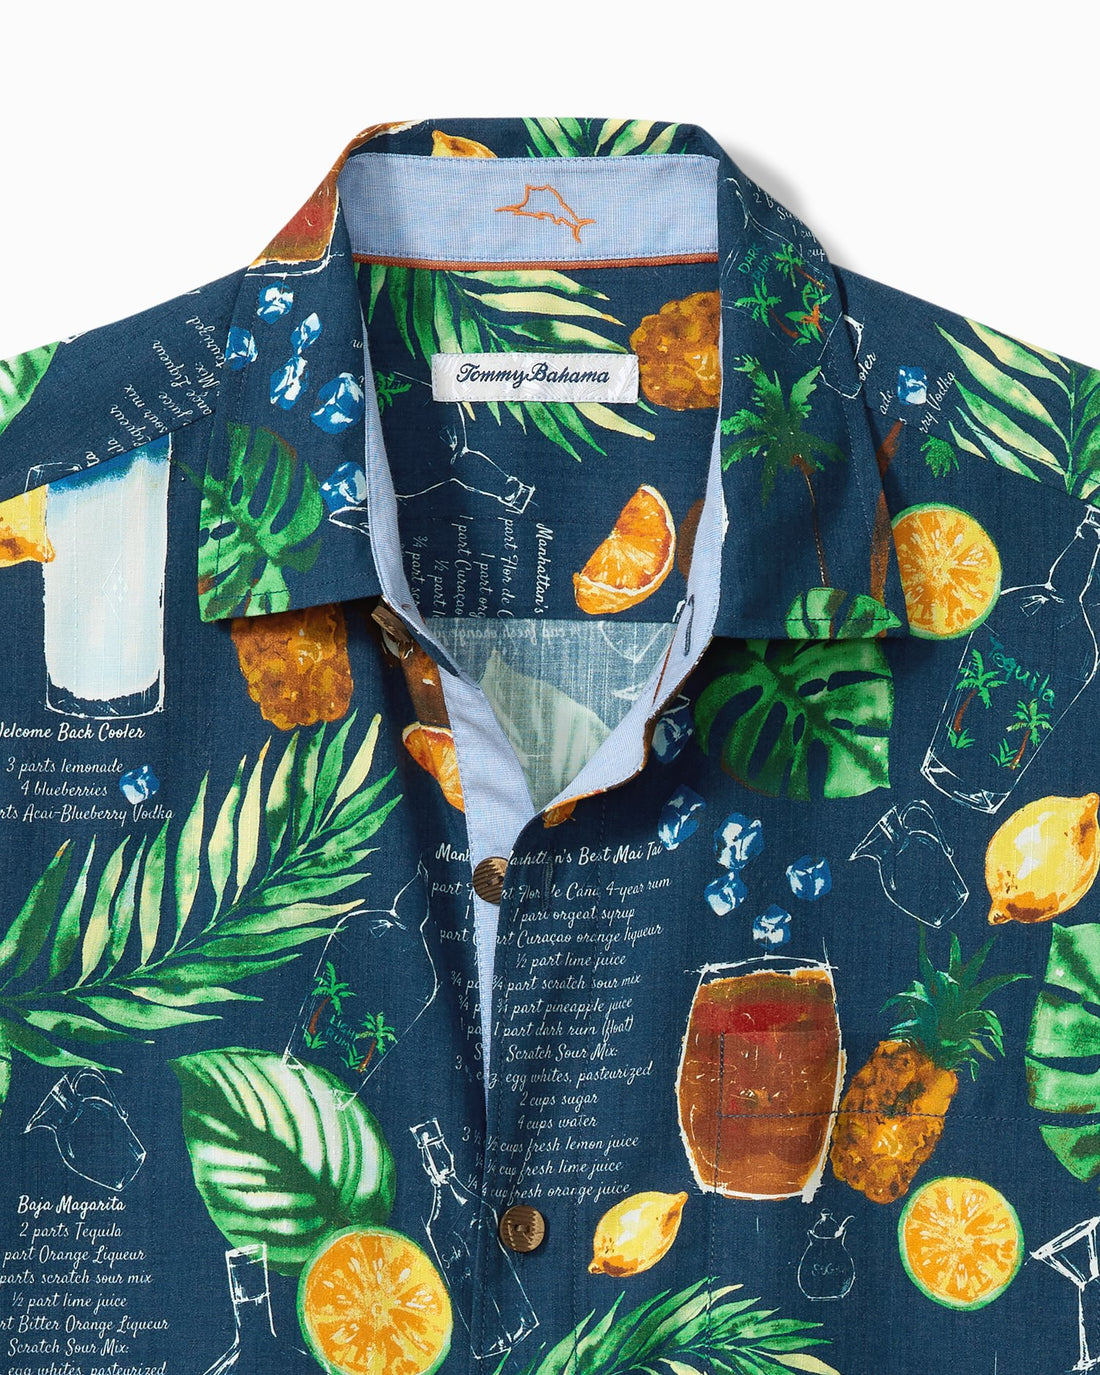 Island Social islandZone® Shirt